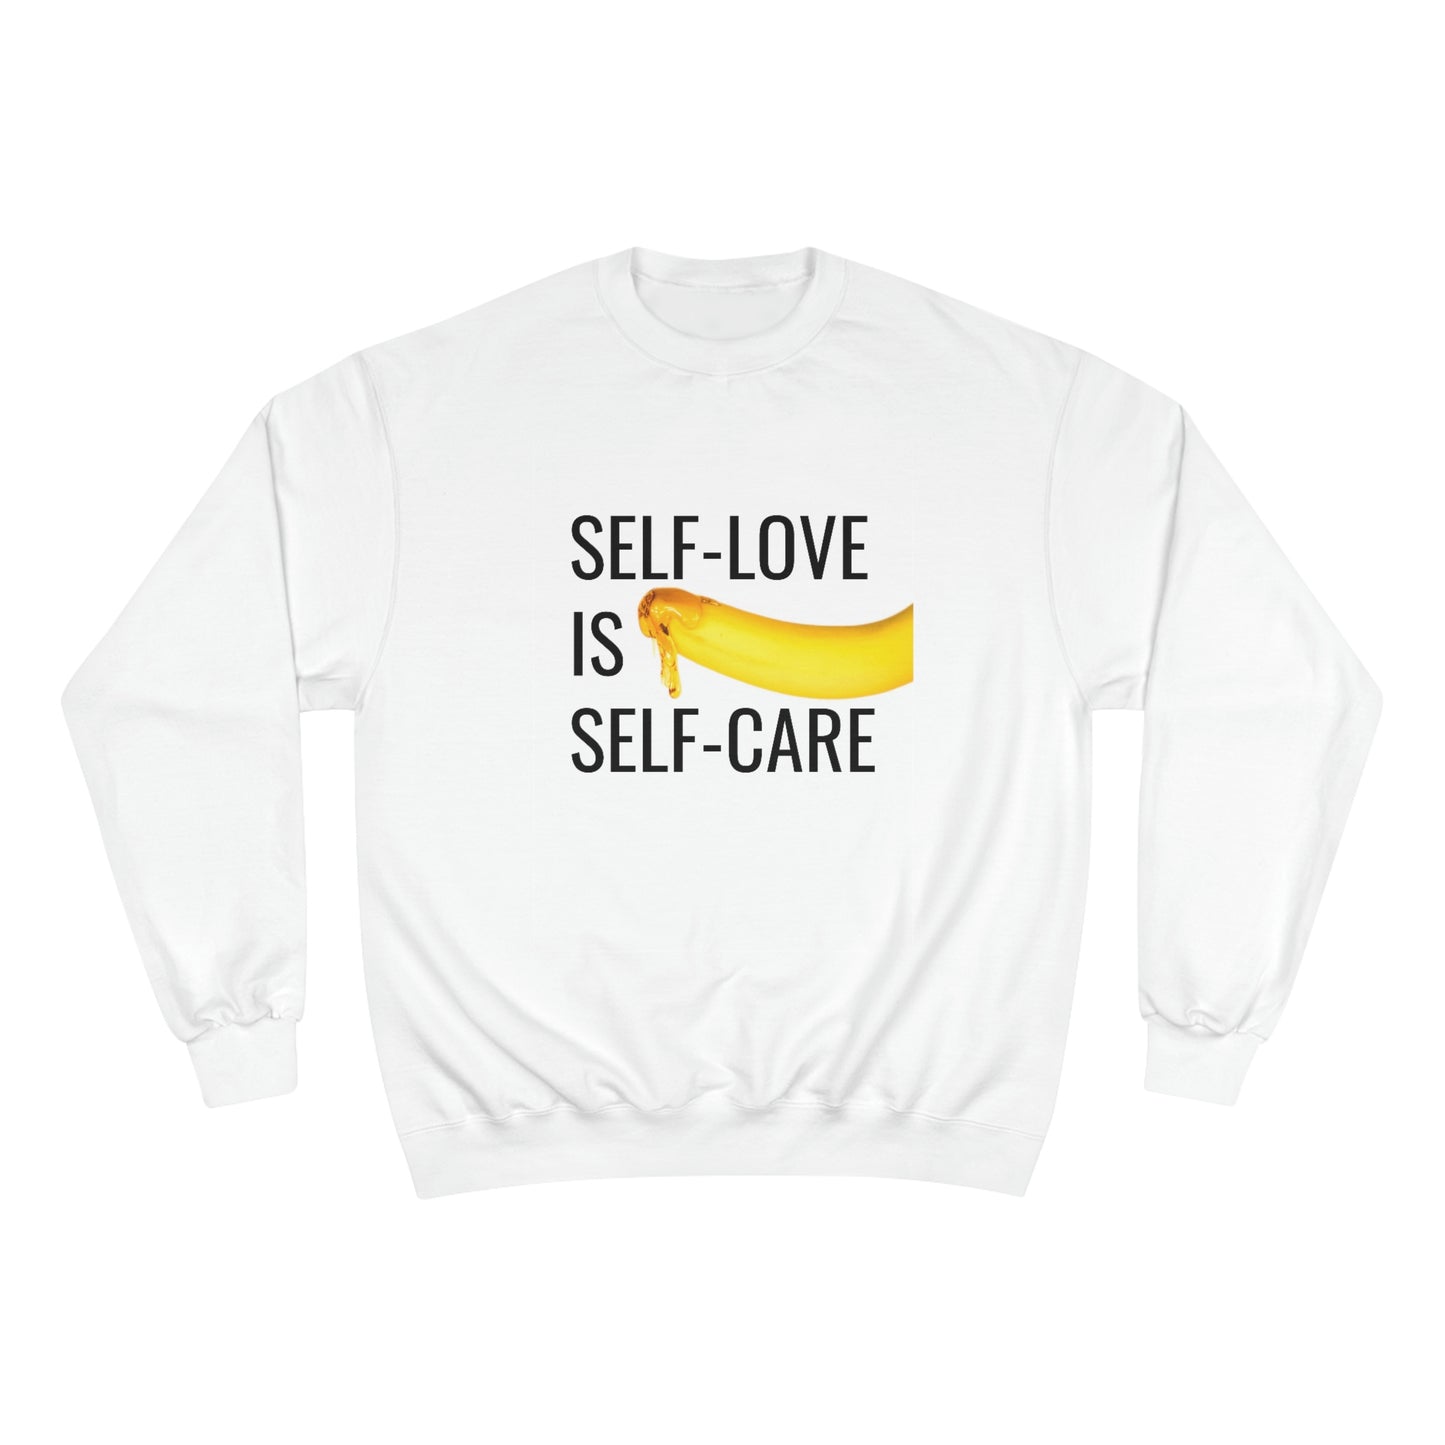 Self-love is Self-care Champion Crewneck